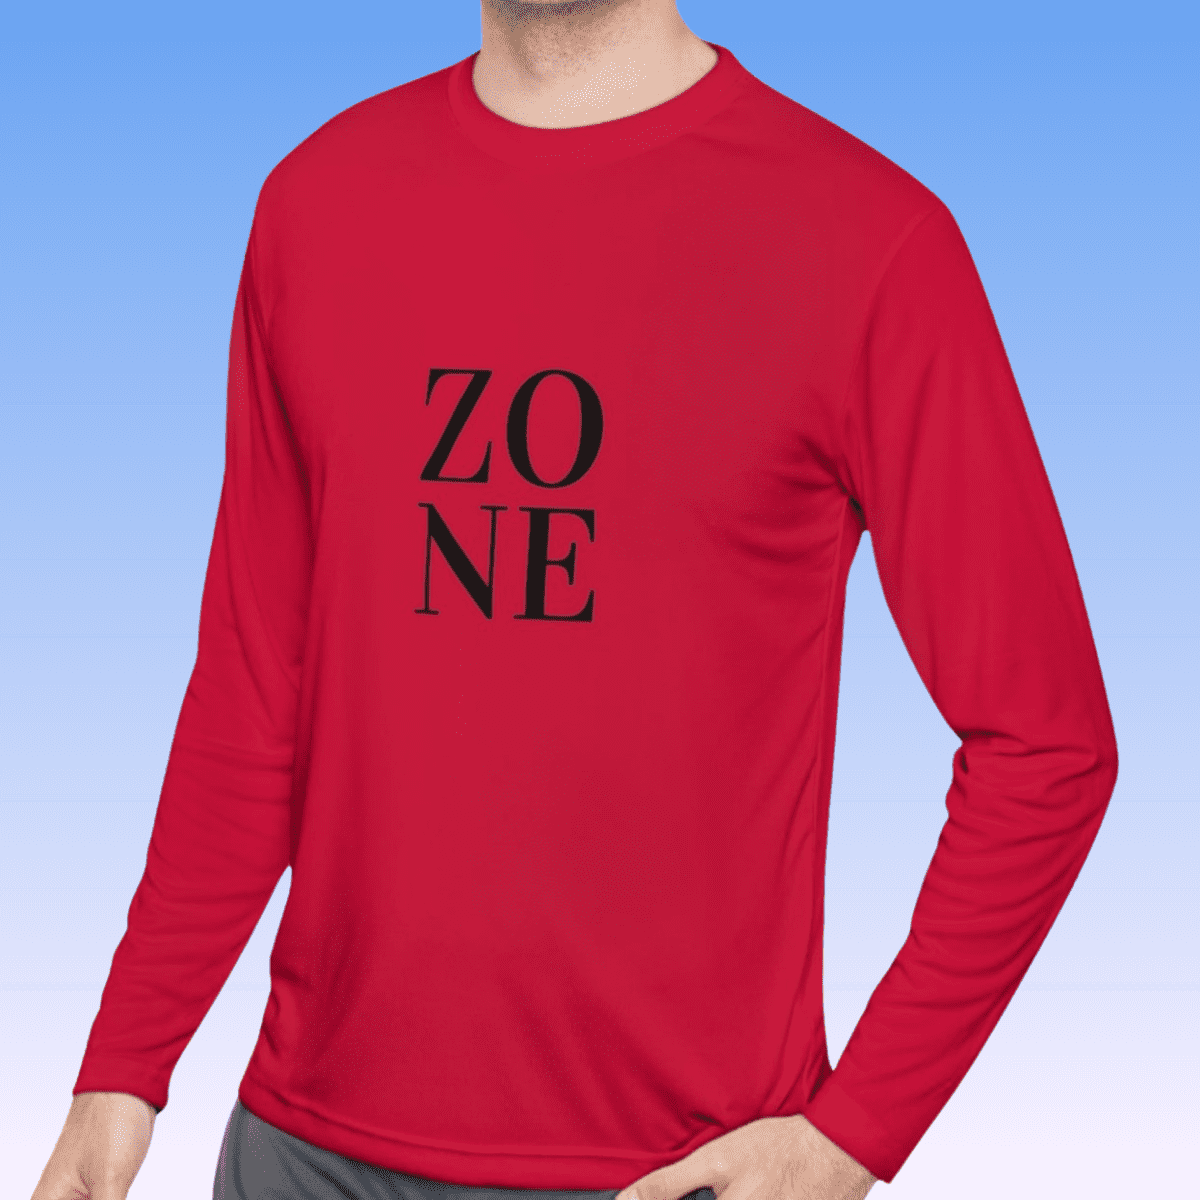 Red Men's Zone Black Long Sleeve Moisture-Wicking Tee